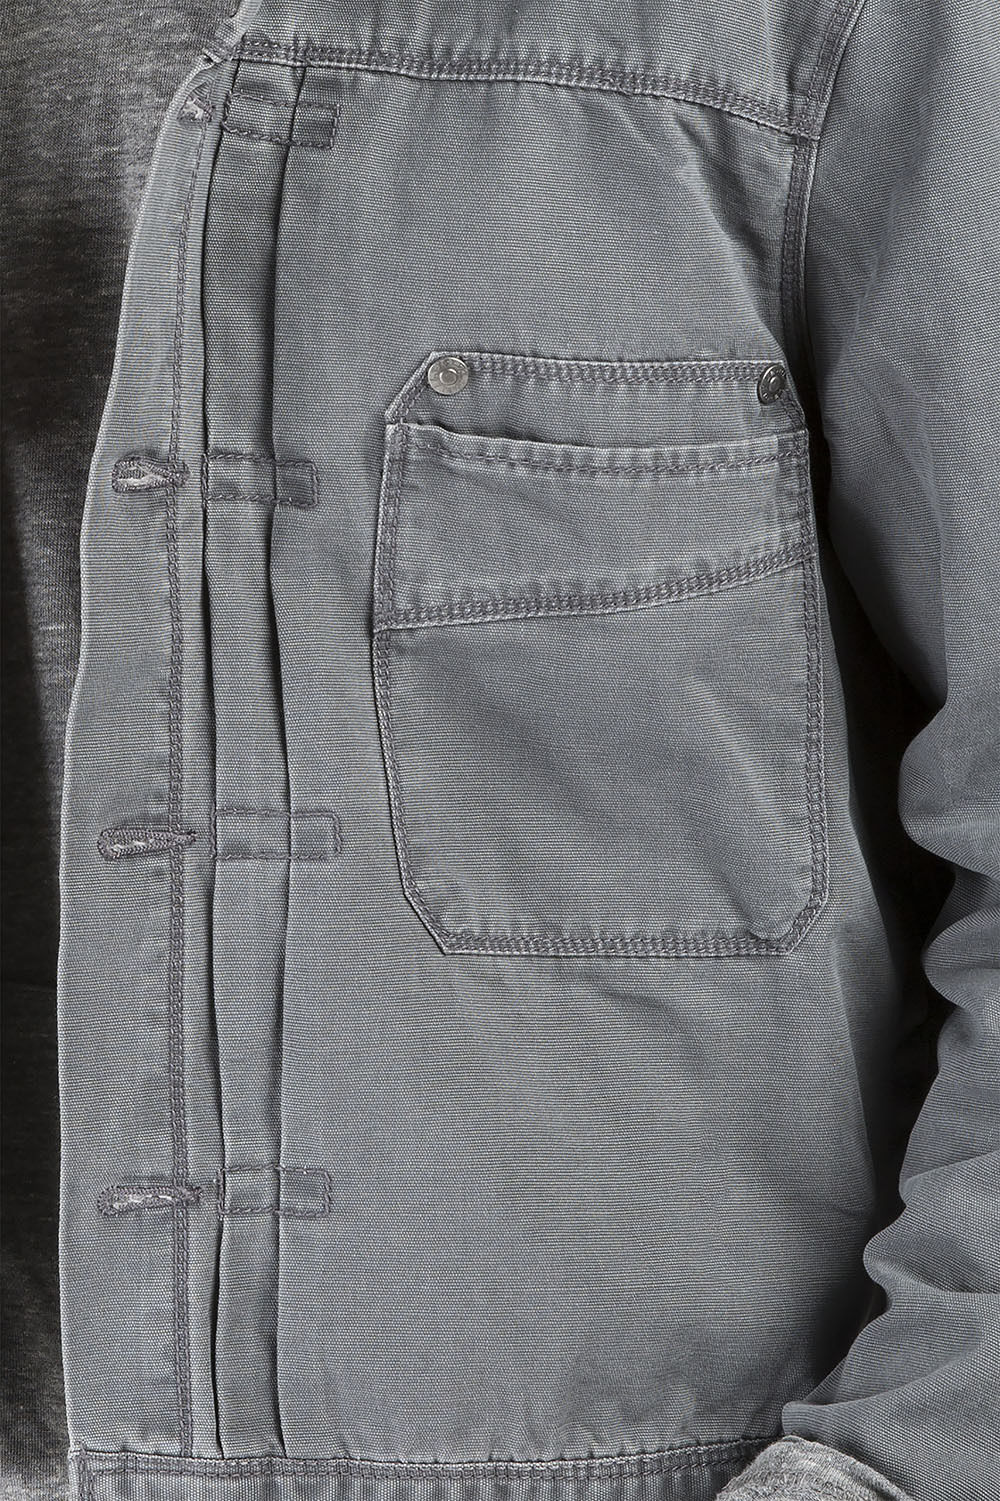 Charcoal Grey Heavy Stone Wash Canvas Trucker Jacket 100% Cotton Rugged & Stylish